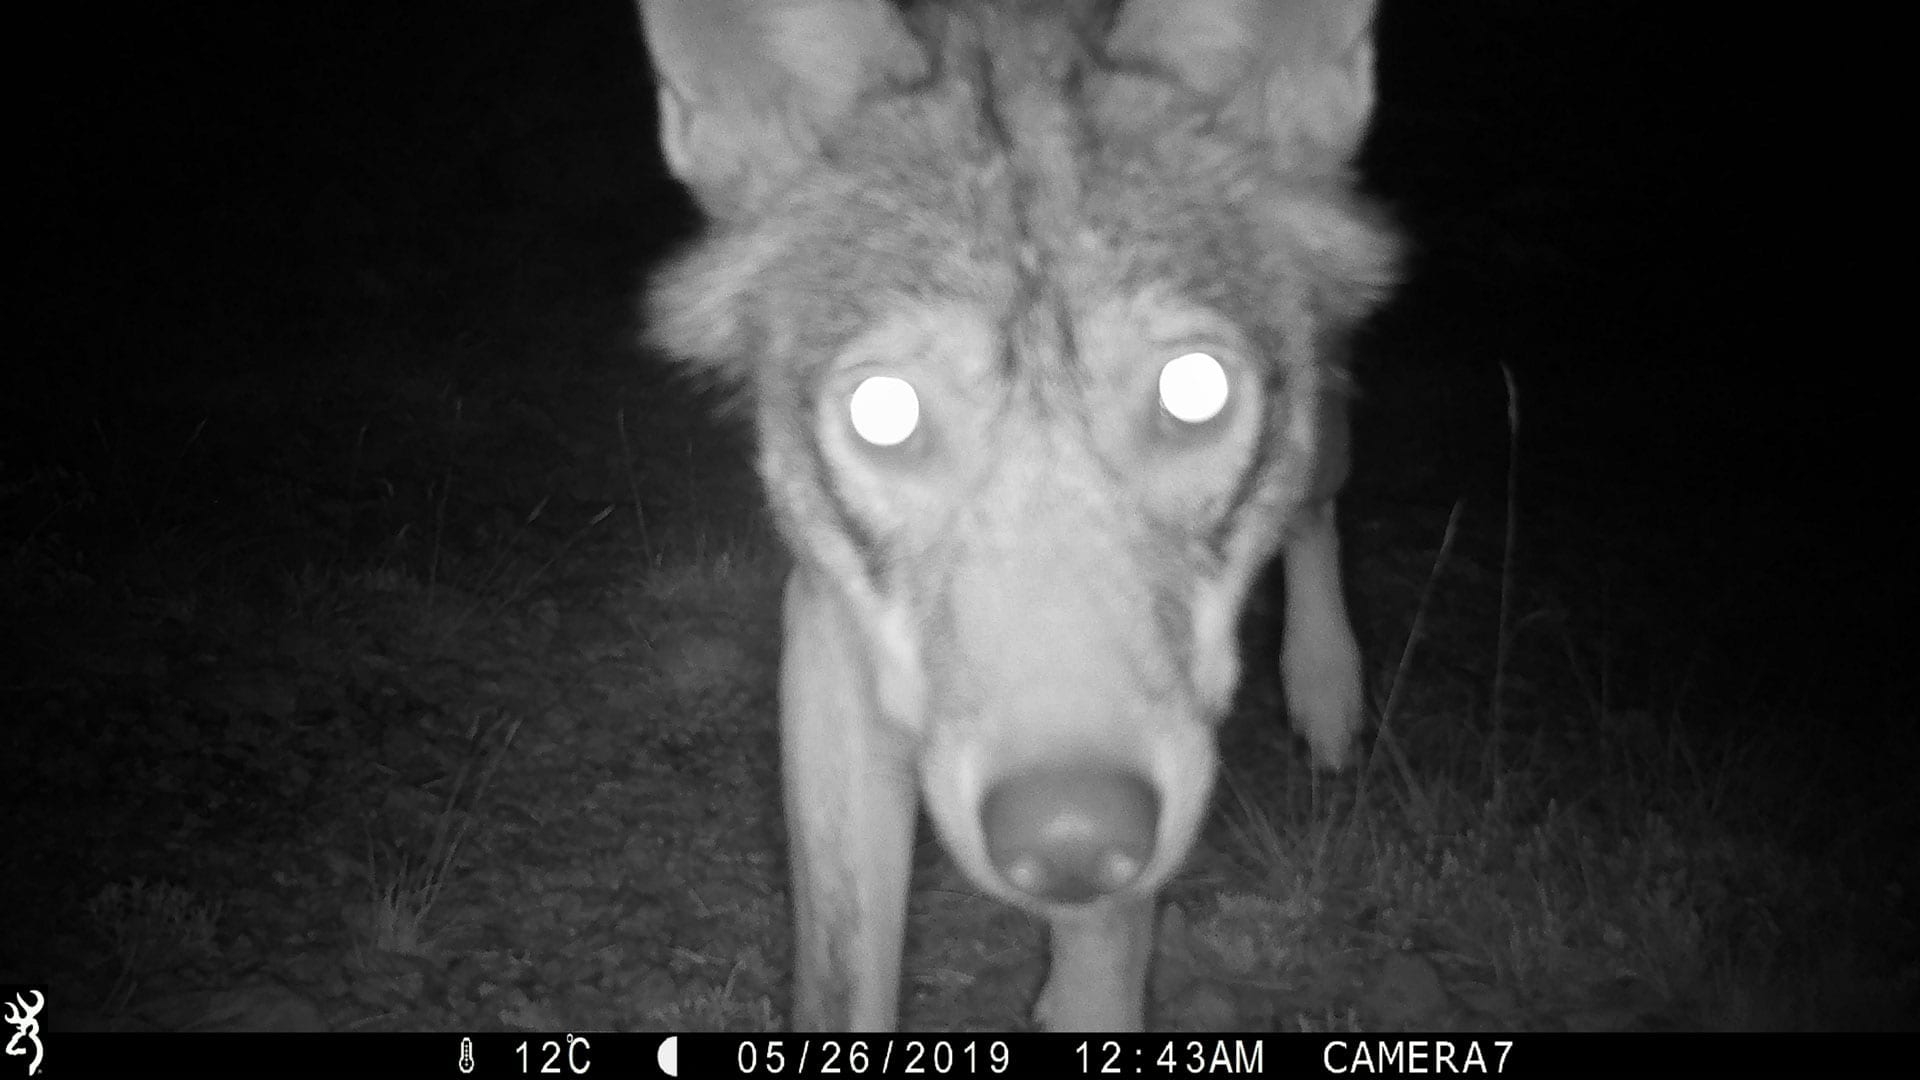 Croatian Wolf on camera trap